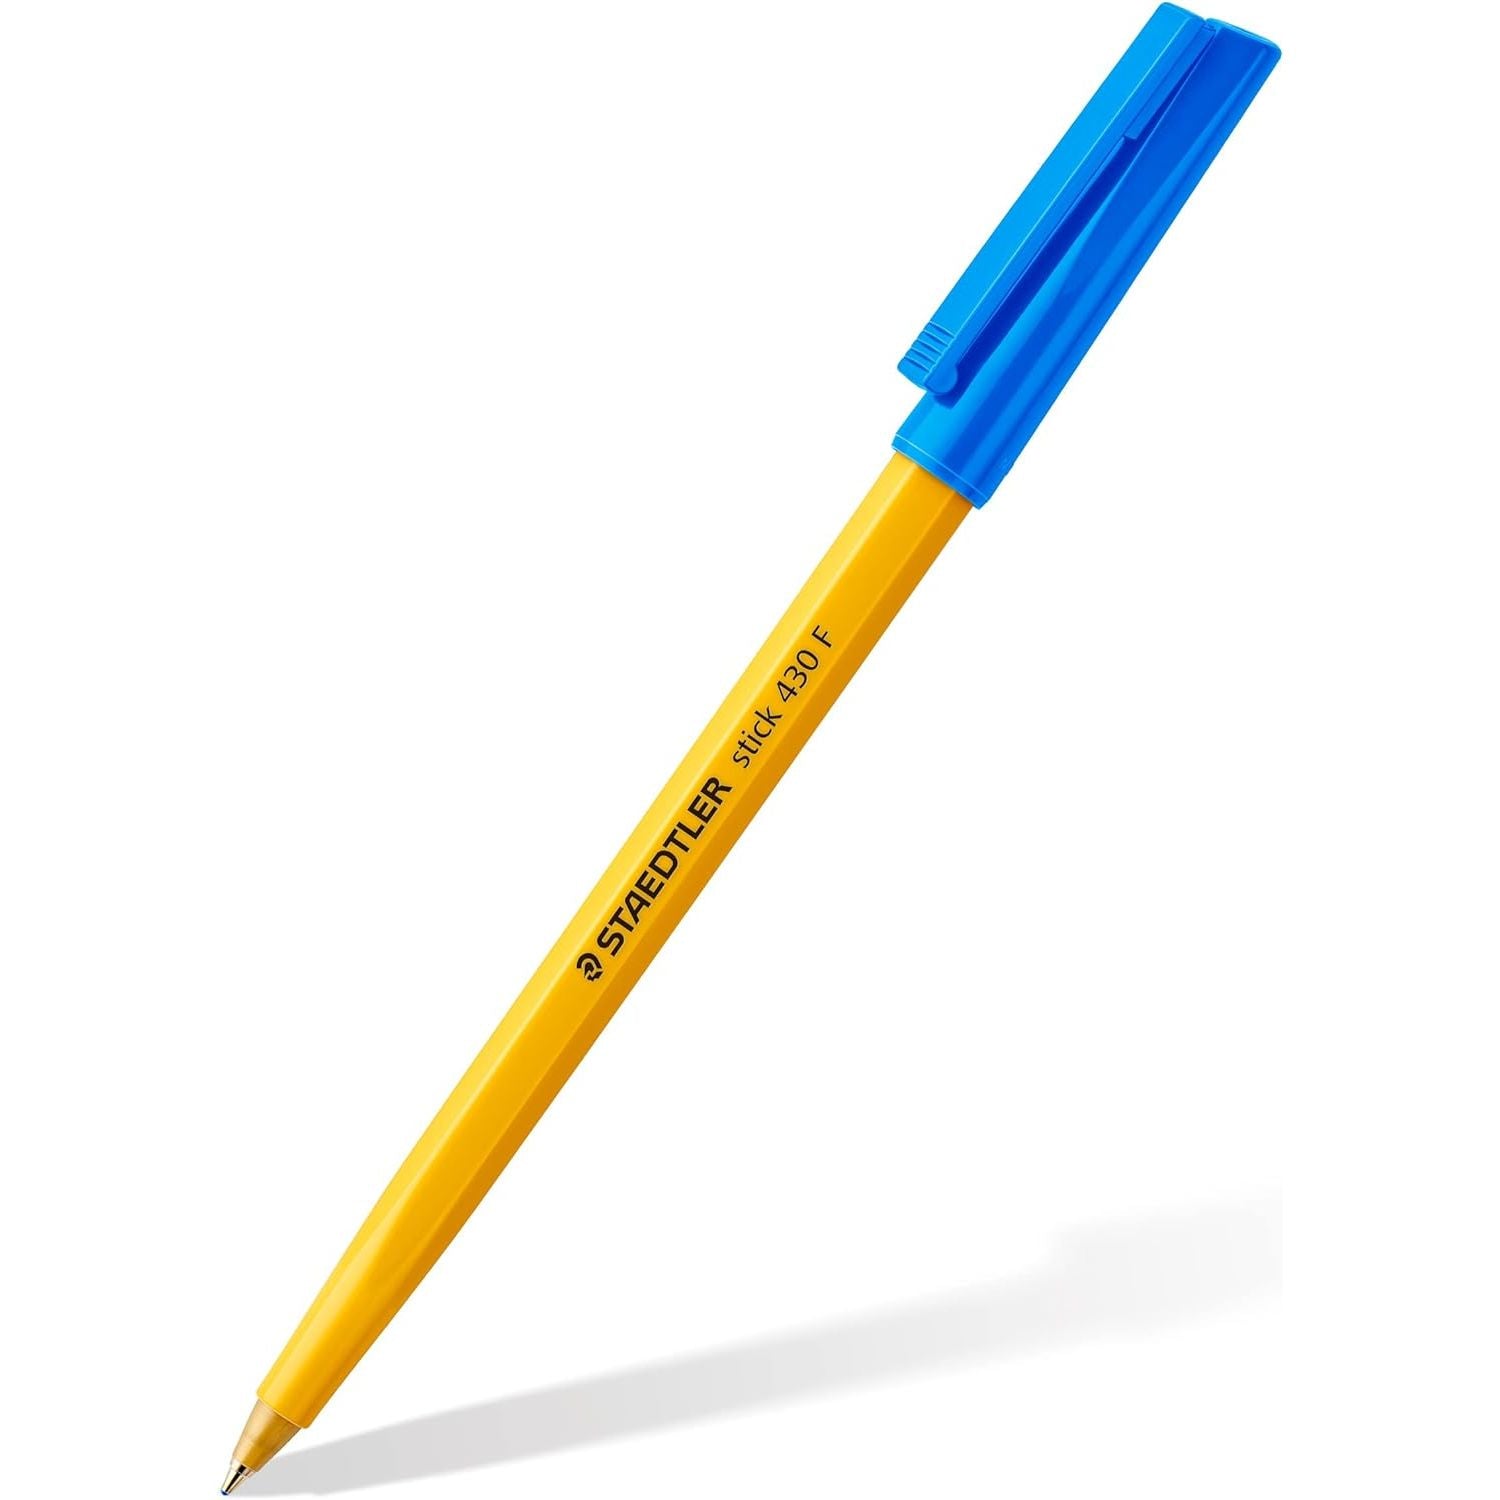 STAEDTLER Medium Stick 430 F-3 Ballpoint Pen Fine, Blue, Pack of 10